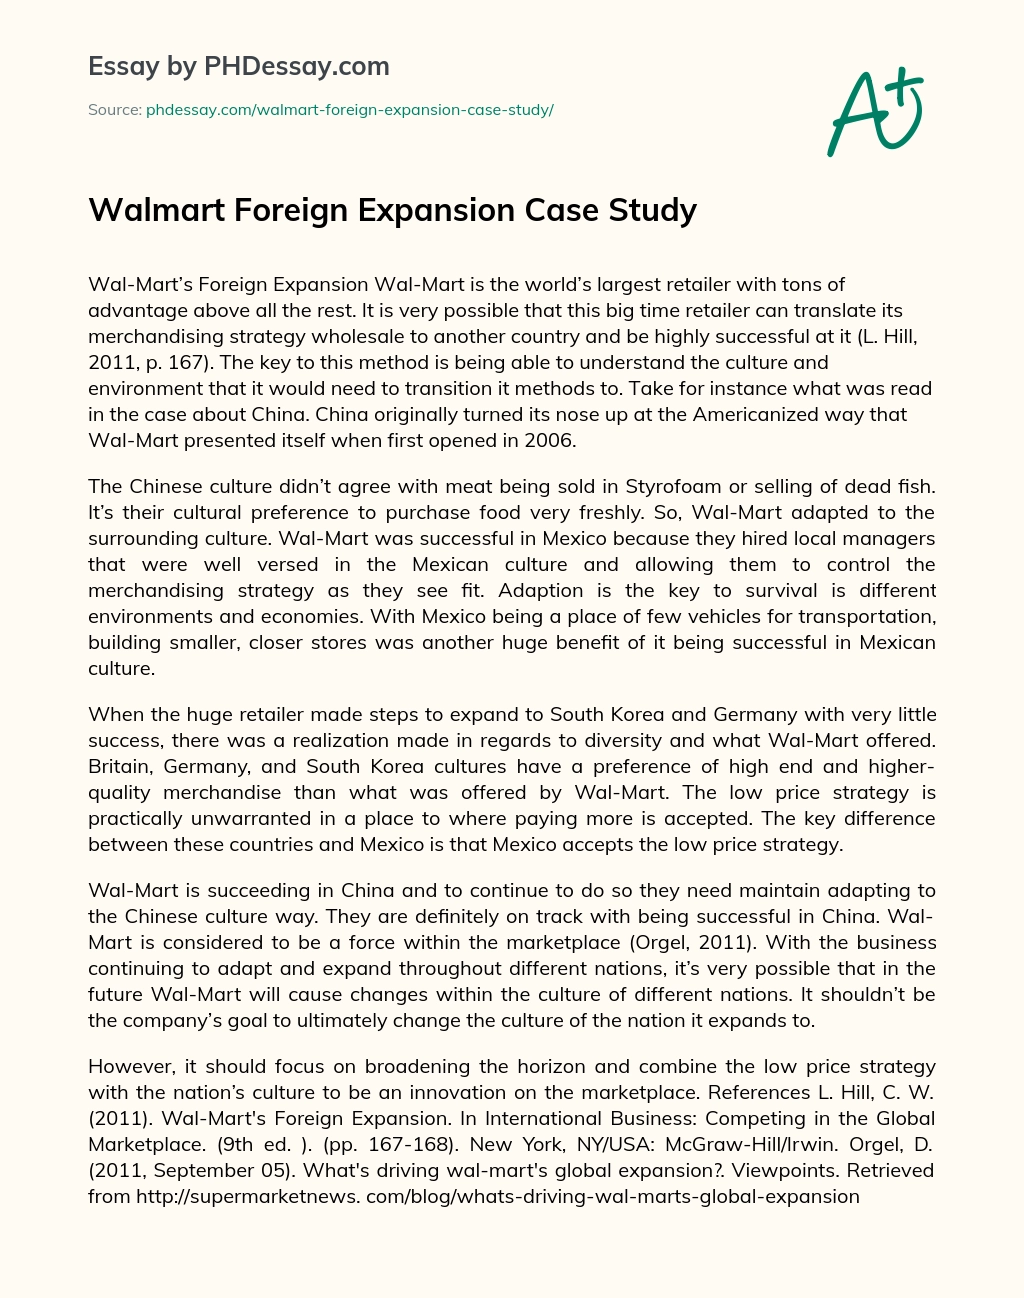 Walmart Foreign Expansion Case Study essay